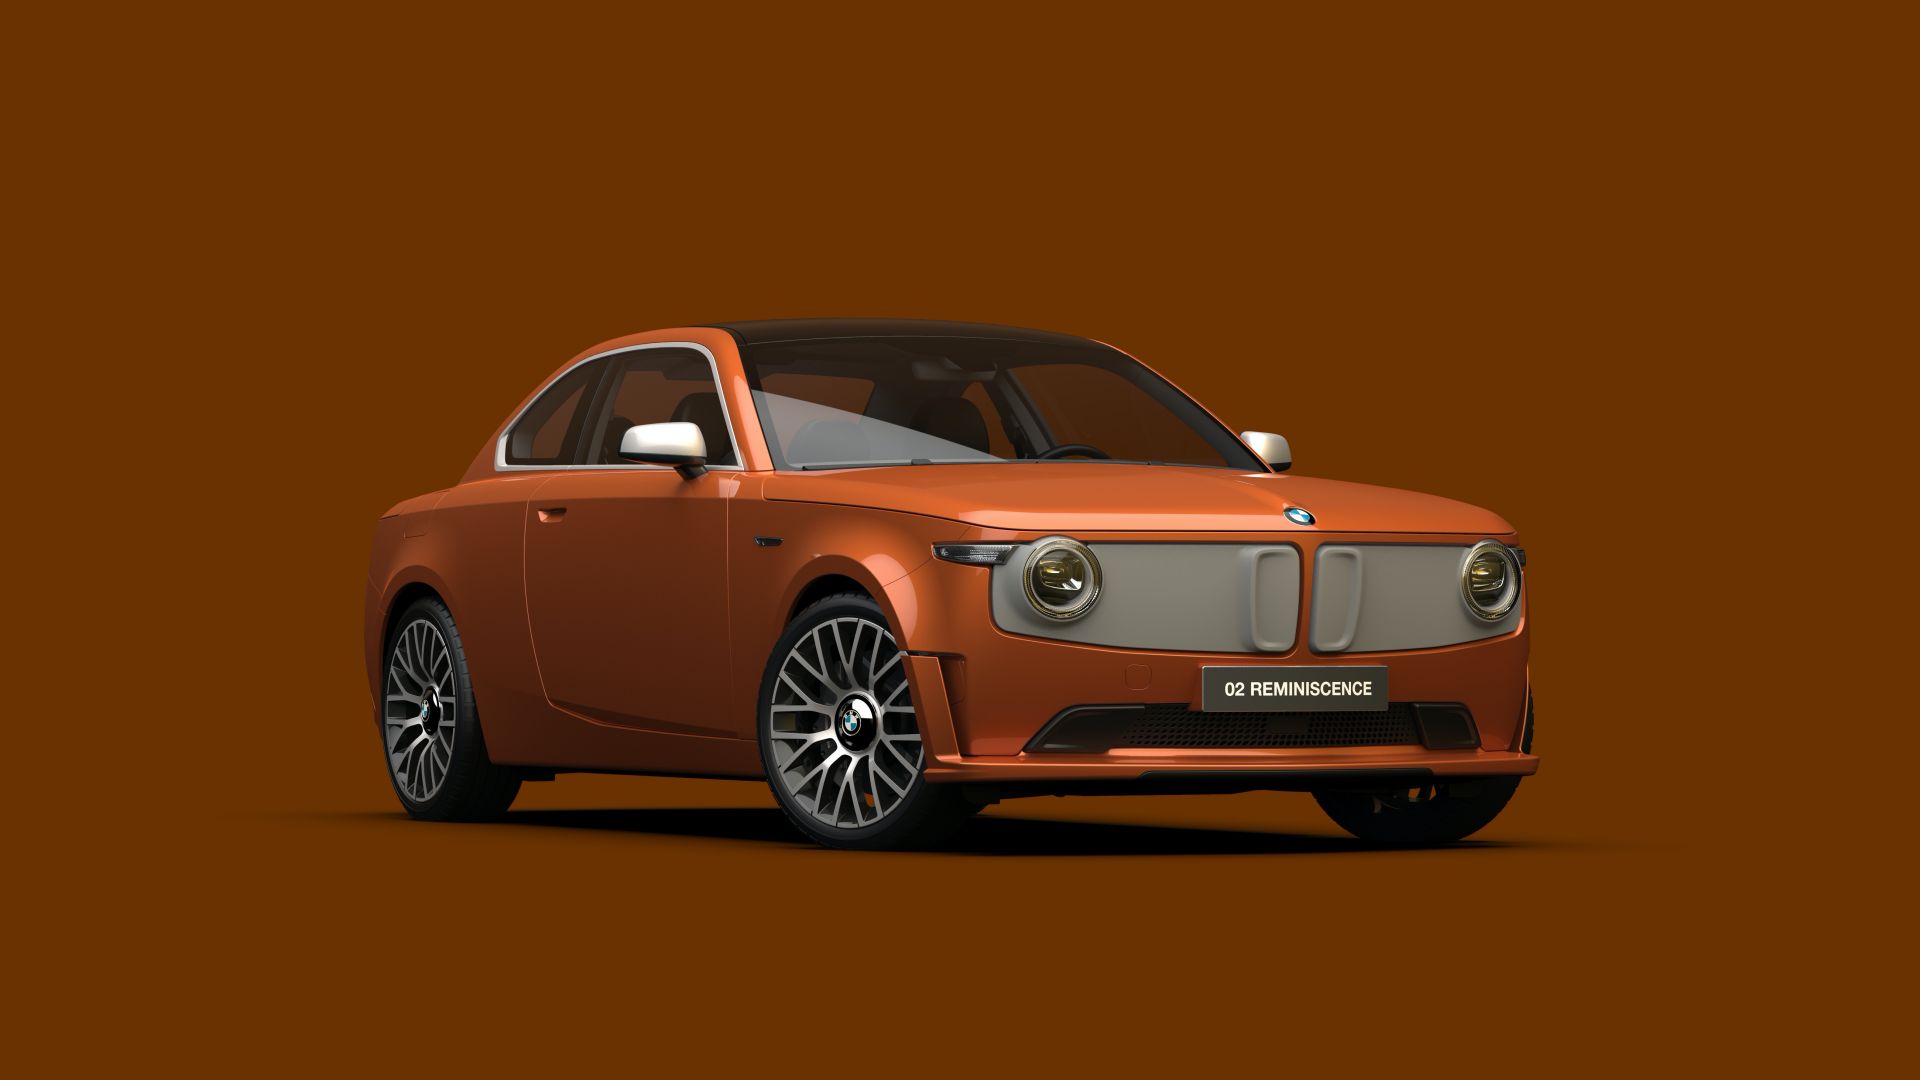 BMW-02-Reminiscence-Concept-by-David-Obendorfer-3